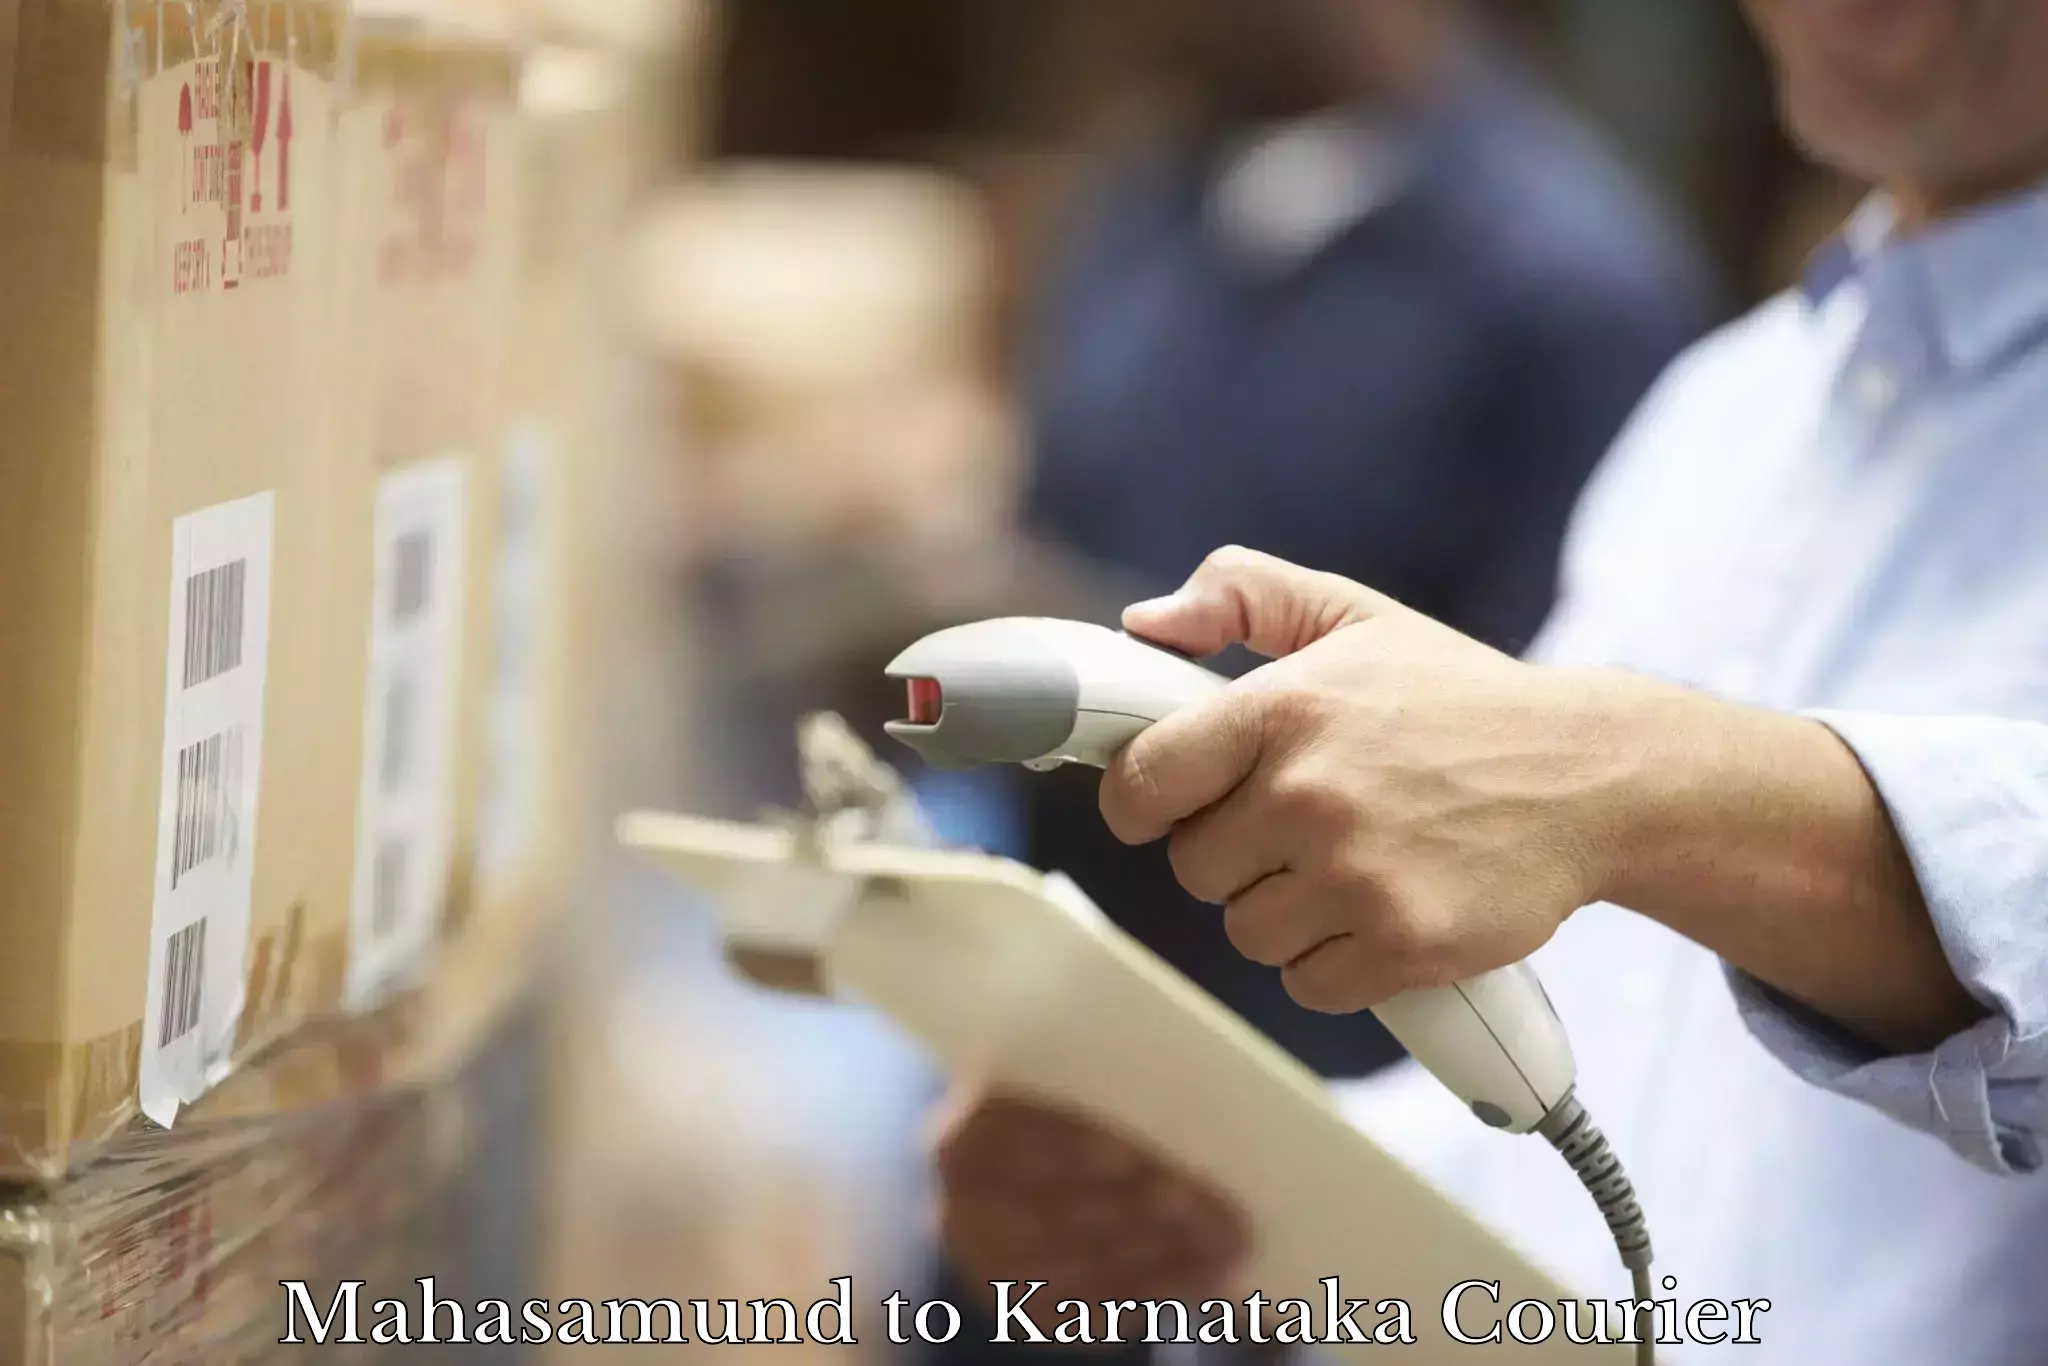 Express delivery network Mahasamund to Karnataka